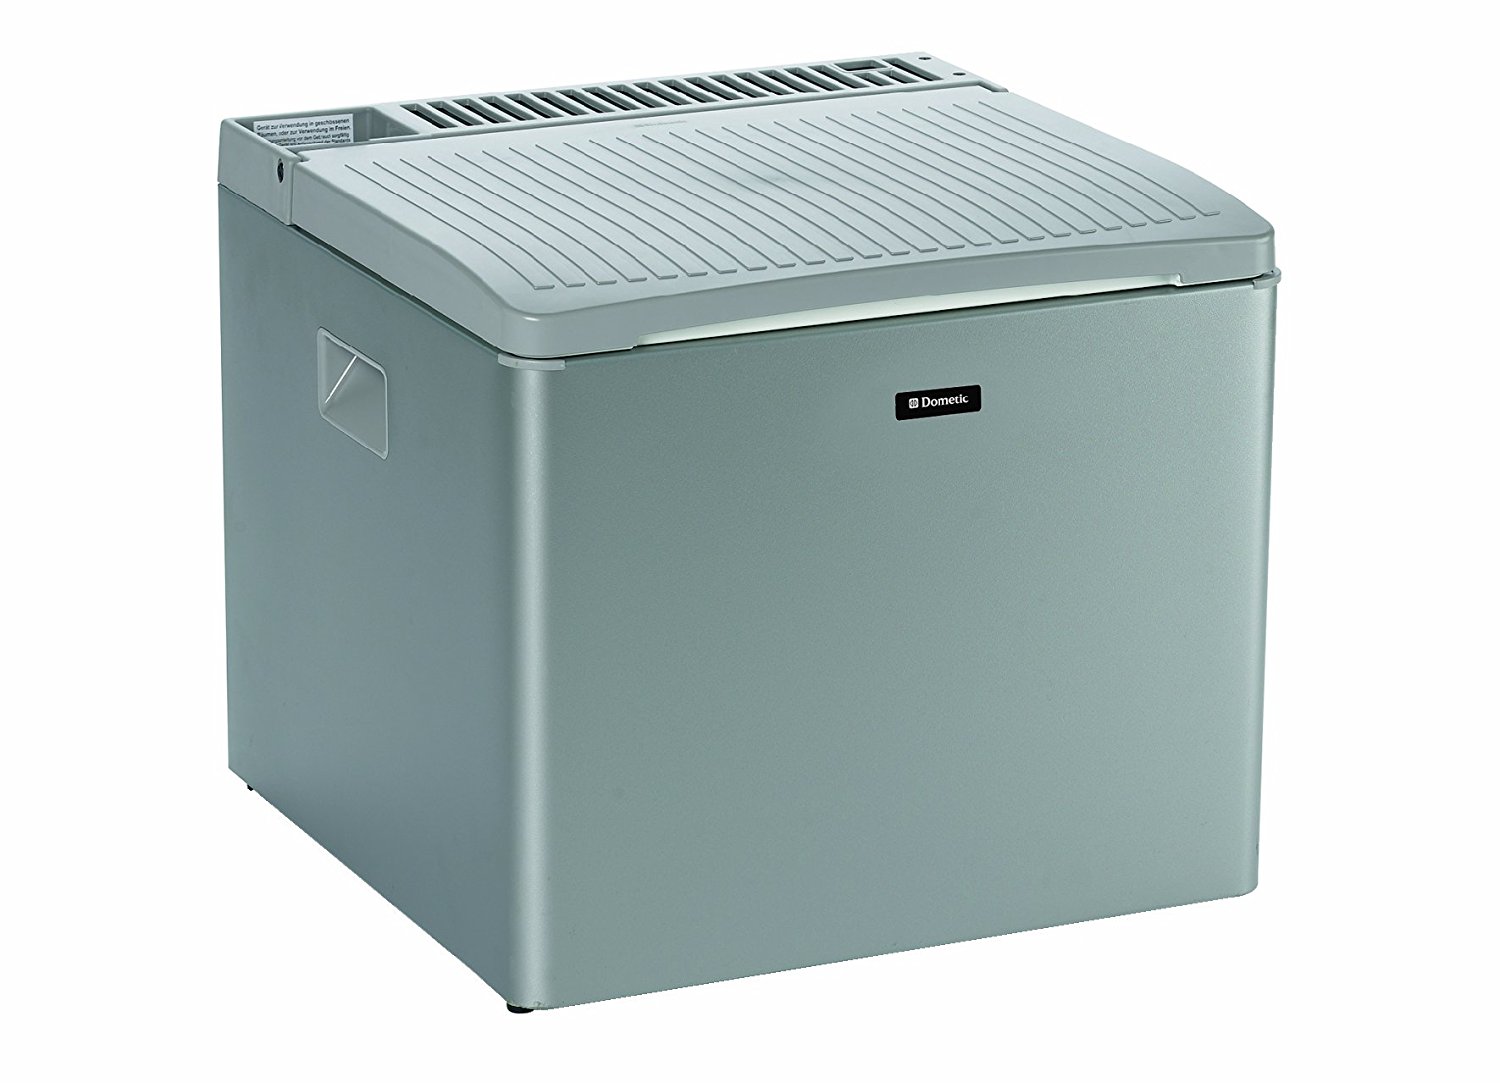 Dometic Waeco RC 1205 GC Test - Absorberbox oder elektrische Kühlbox